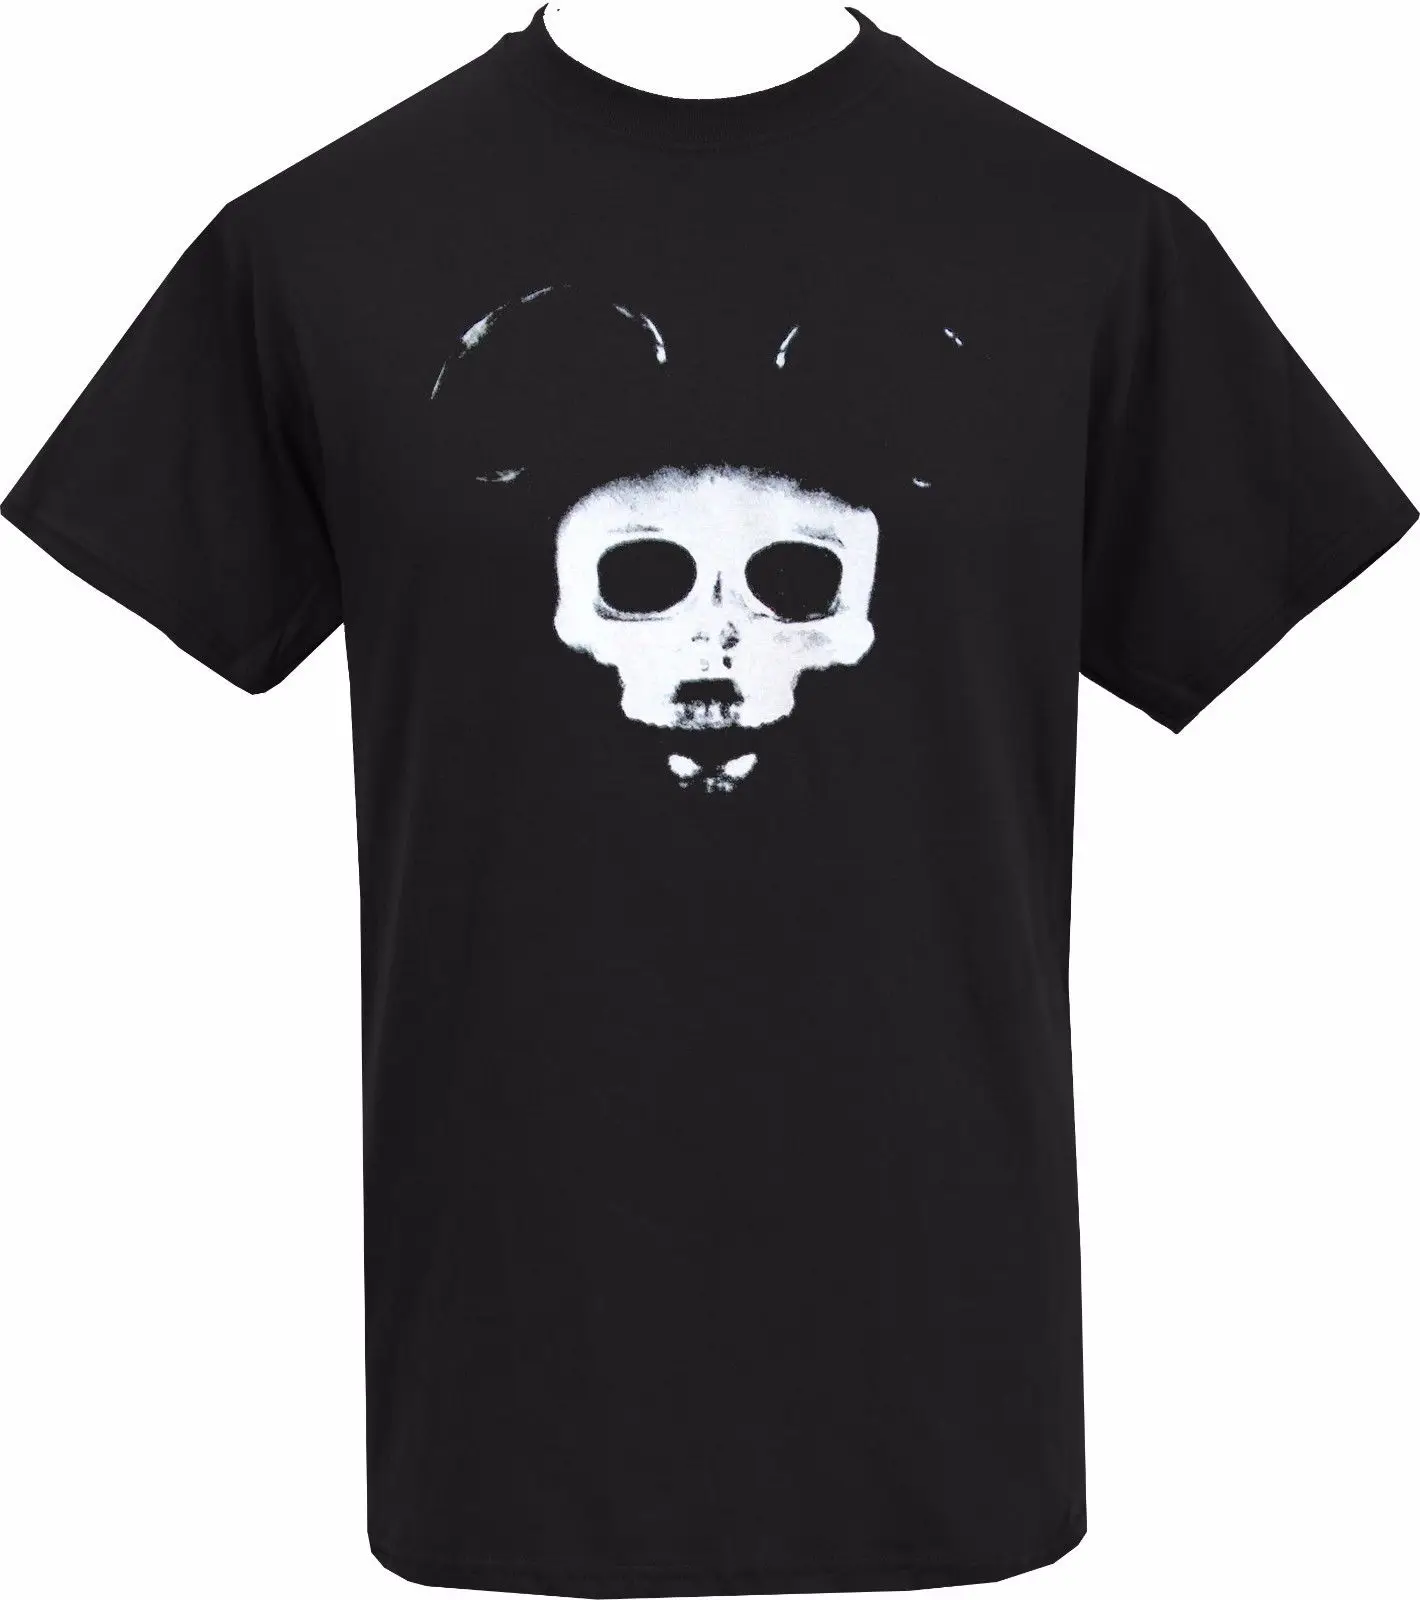 Мужская черная футболка МЫШЬ череп X-RAY готика Готический мыши TAXIDERMY MICKY S-5XL